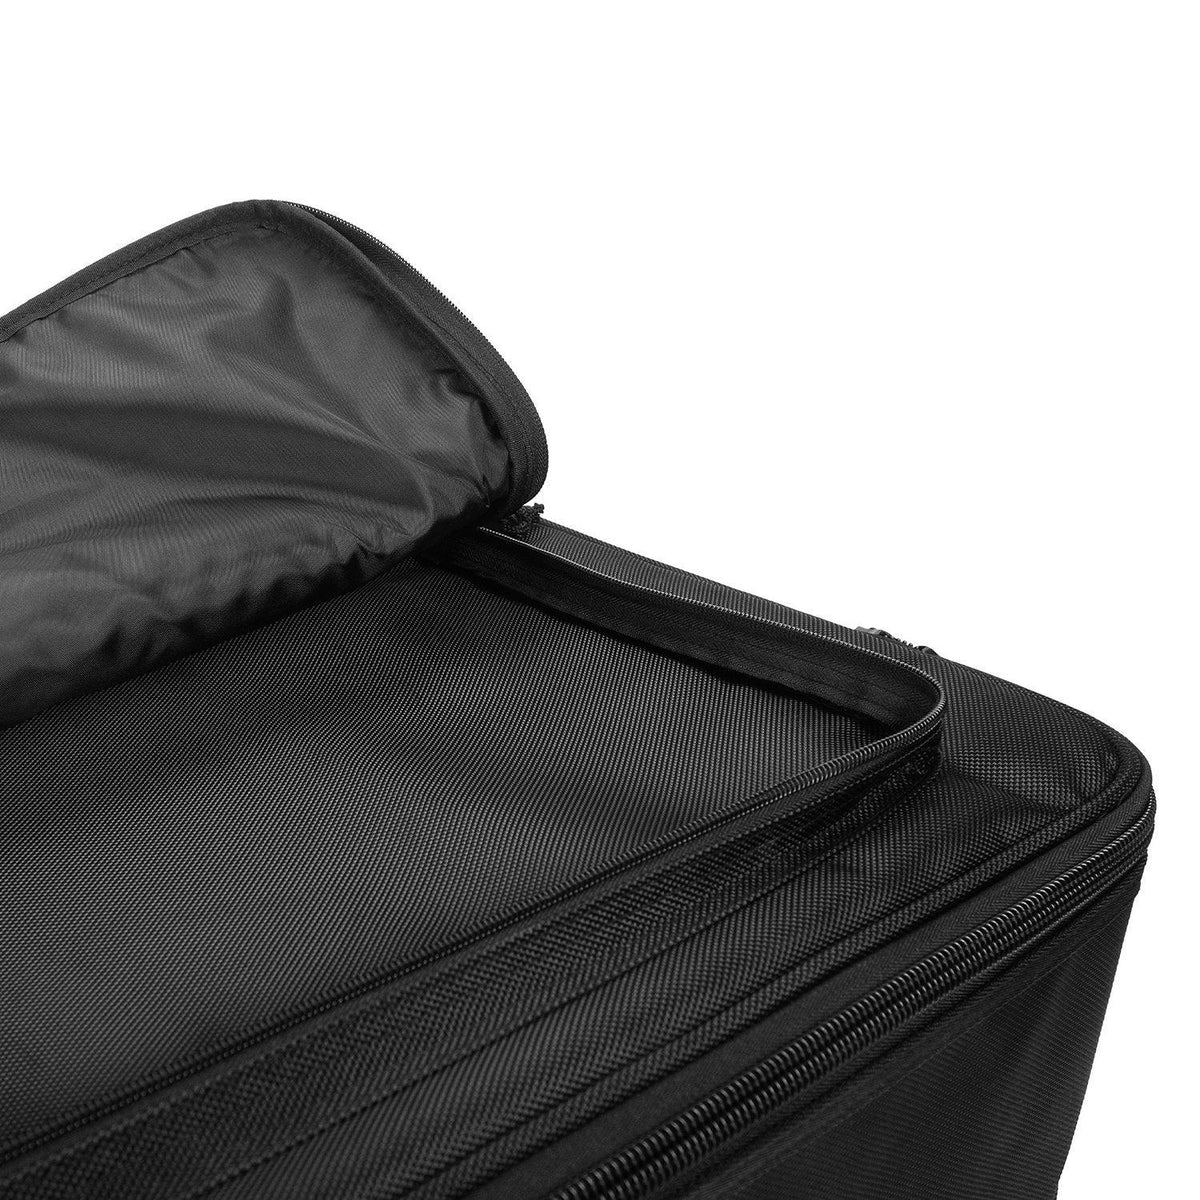 Analog Cases Mobile Producer Backpack